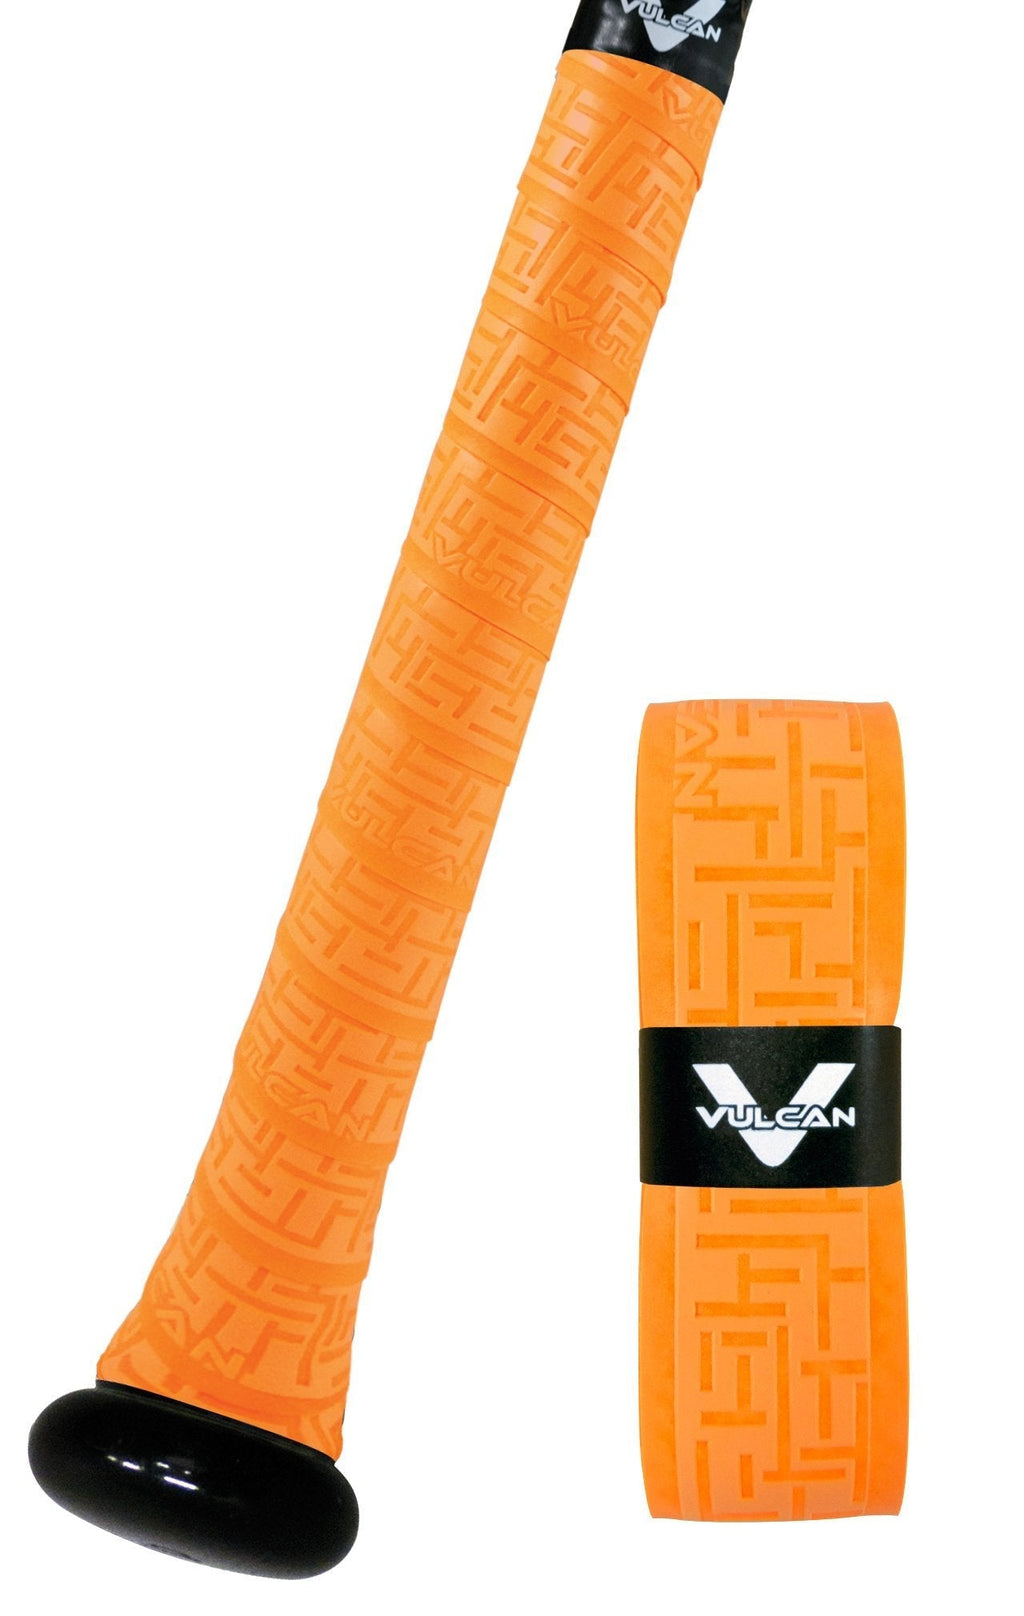 [AUSTRALIA] - Vulcan Bat Grip, Vulcan 1.75mm Bat Grip, Optic Orange 